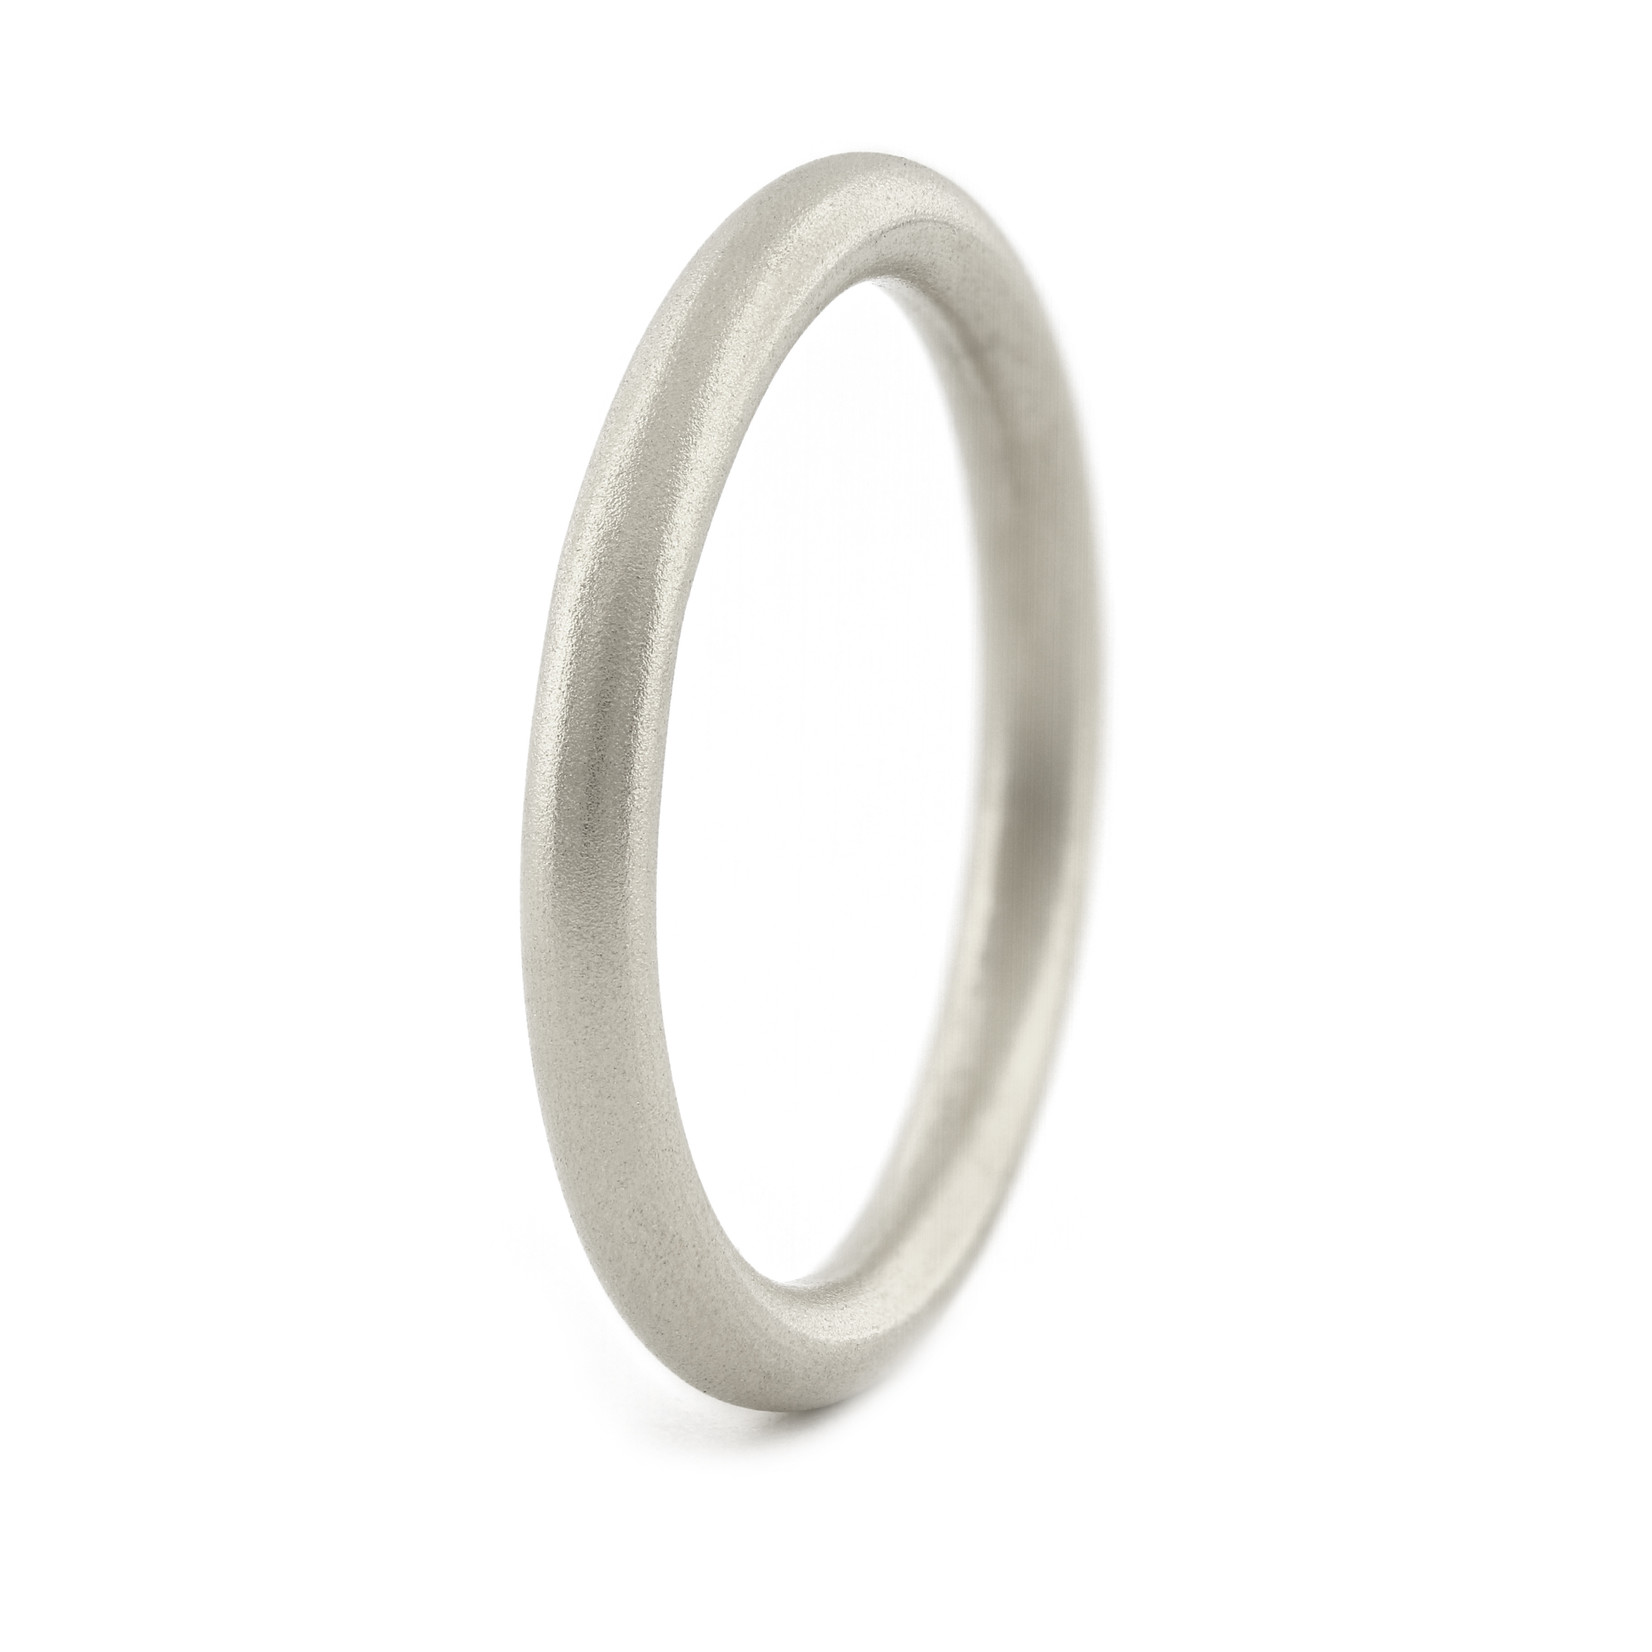 Baxter Moerman Rollo Ring - 2.50mm, Size 7